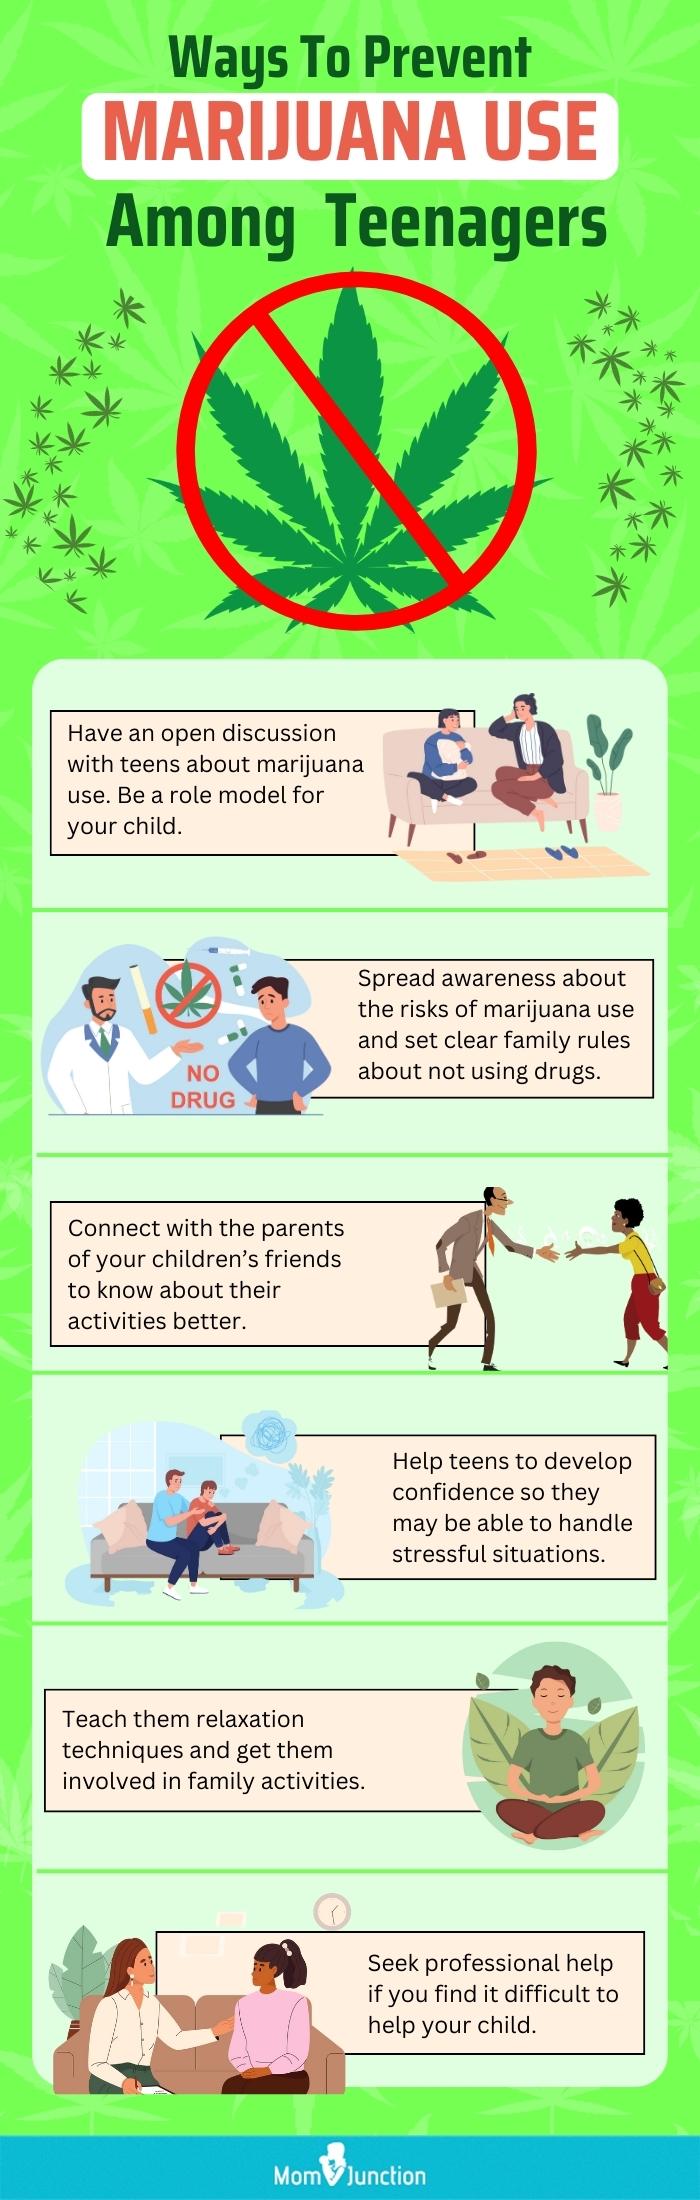 ways to prevent marijuana use among teenagers (infographic)